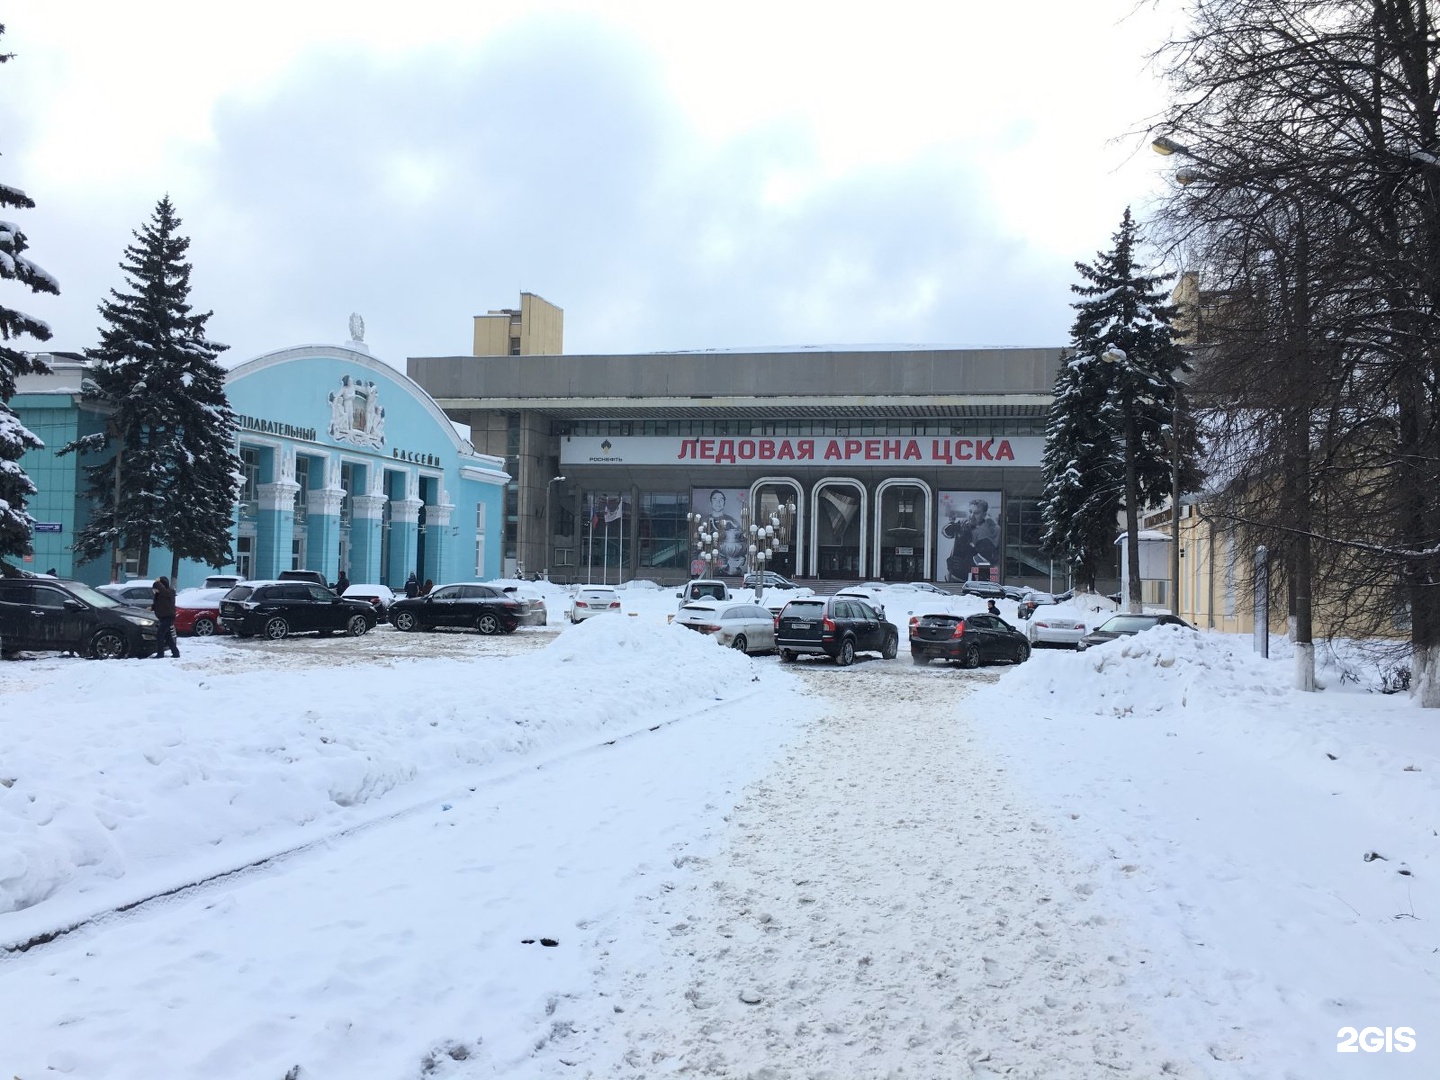 Ледовый дворец цска на ленинградке